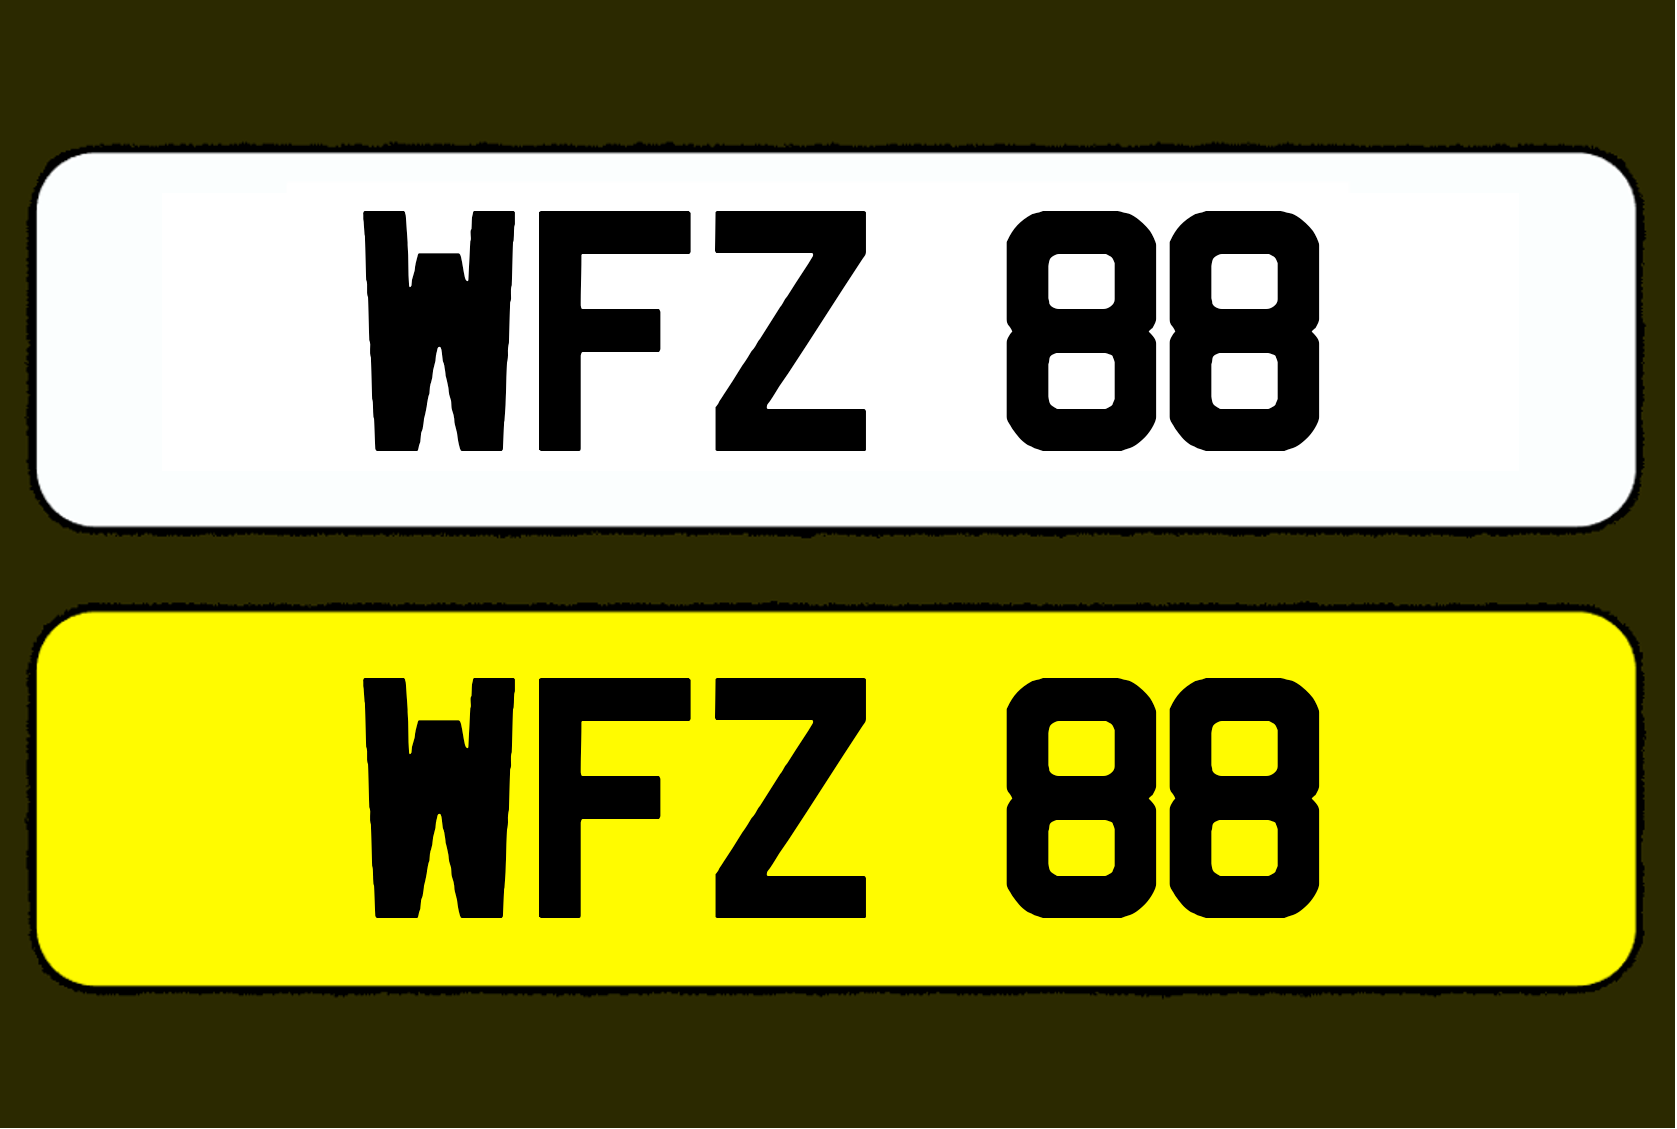 WFZ 88